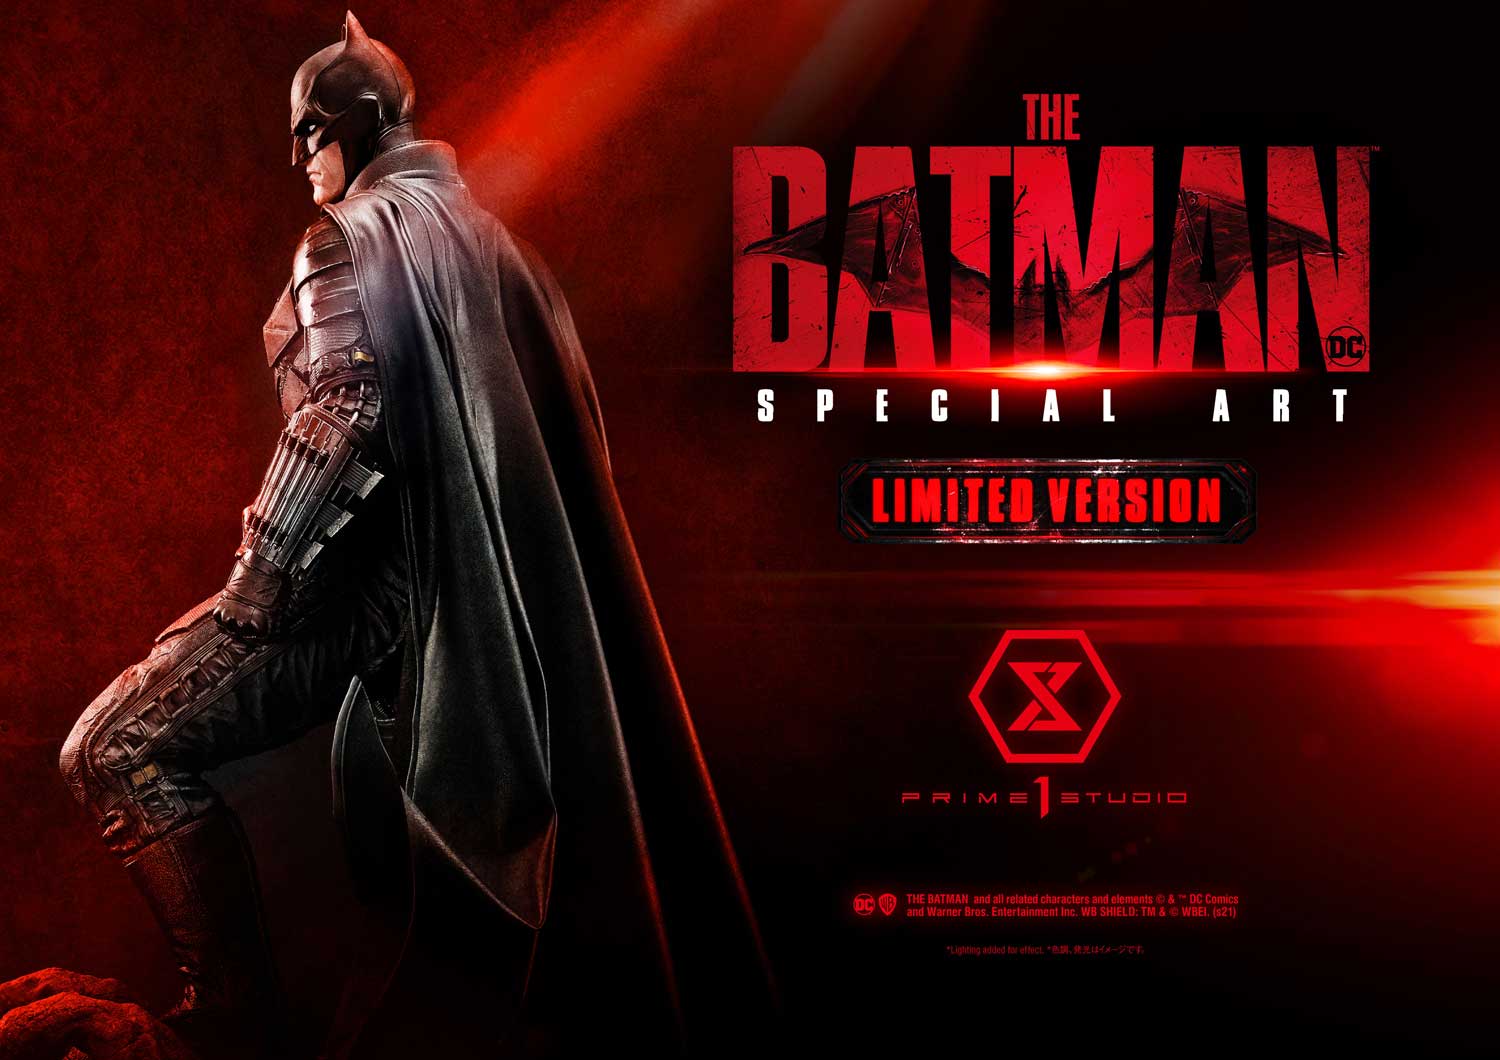 The Batman Special Art Edition Limited Version. PRIME 1 STUDIO